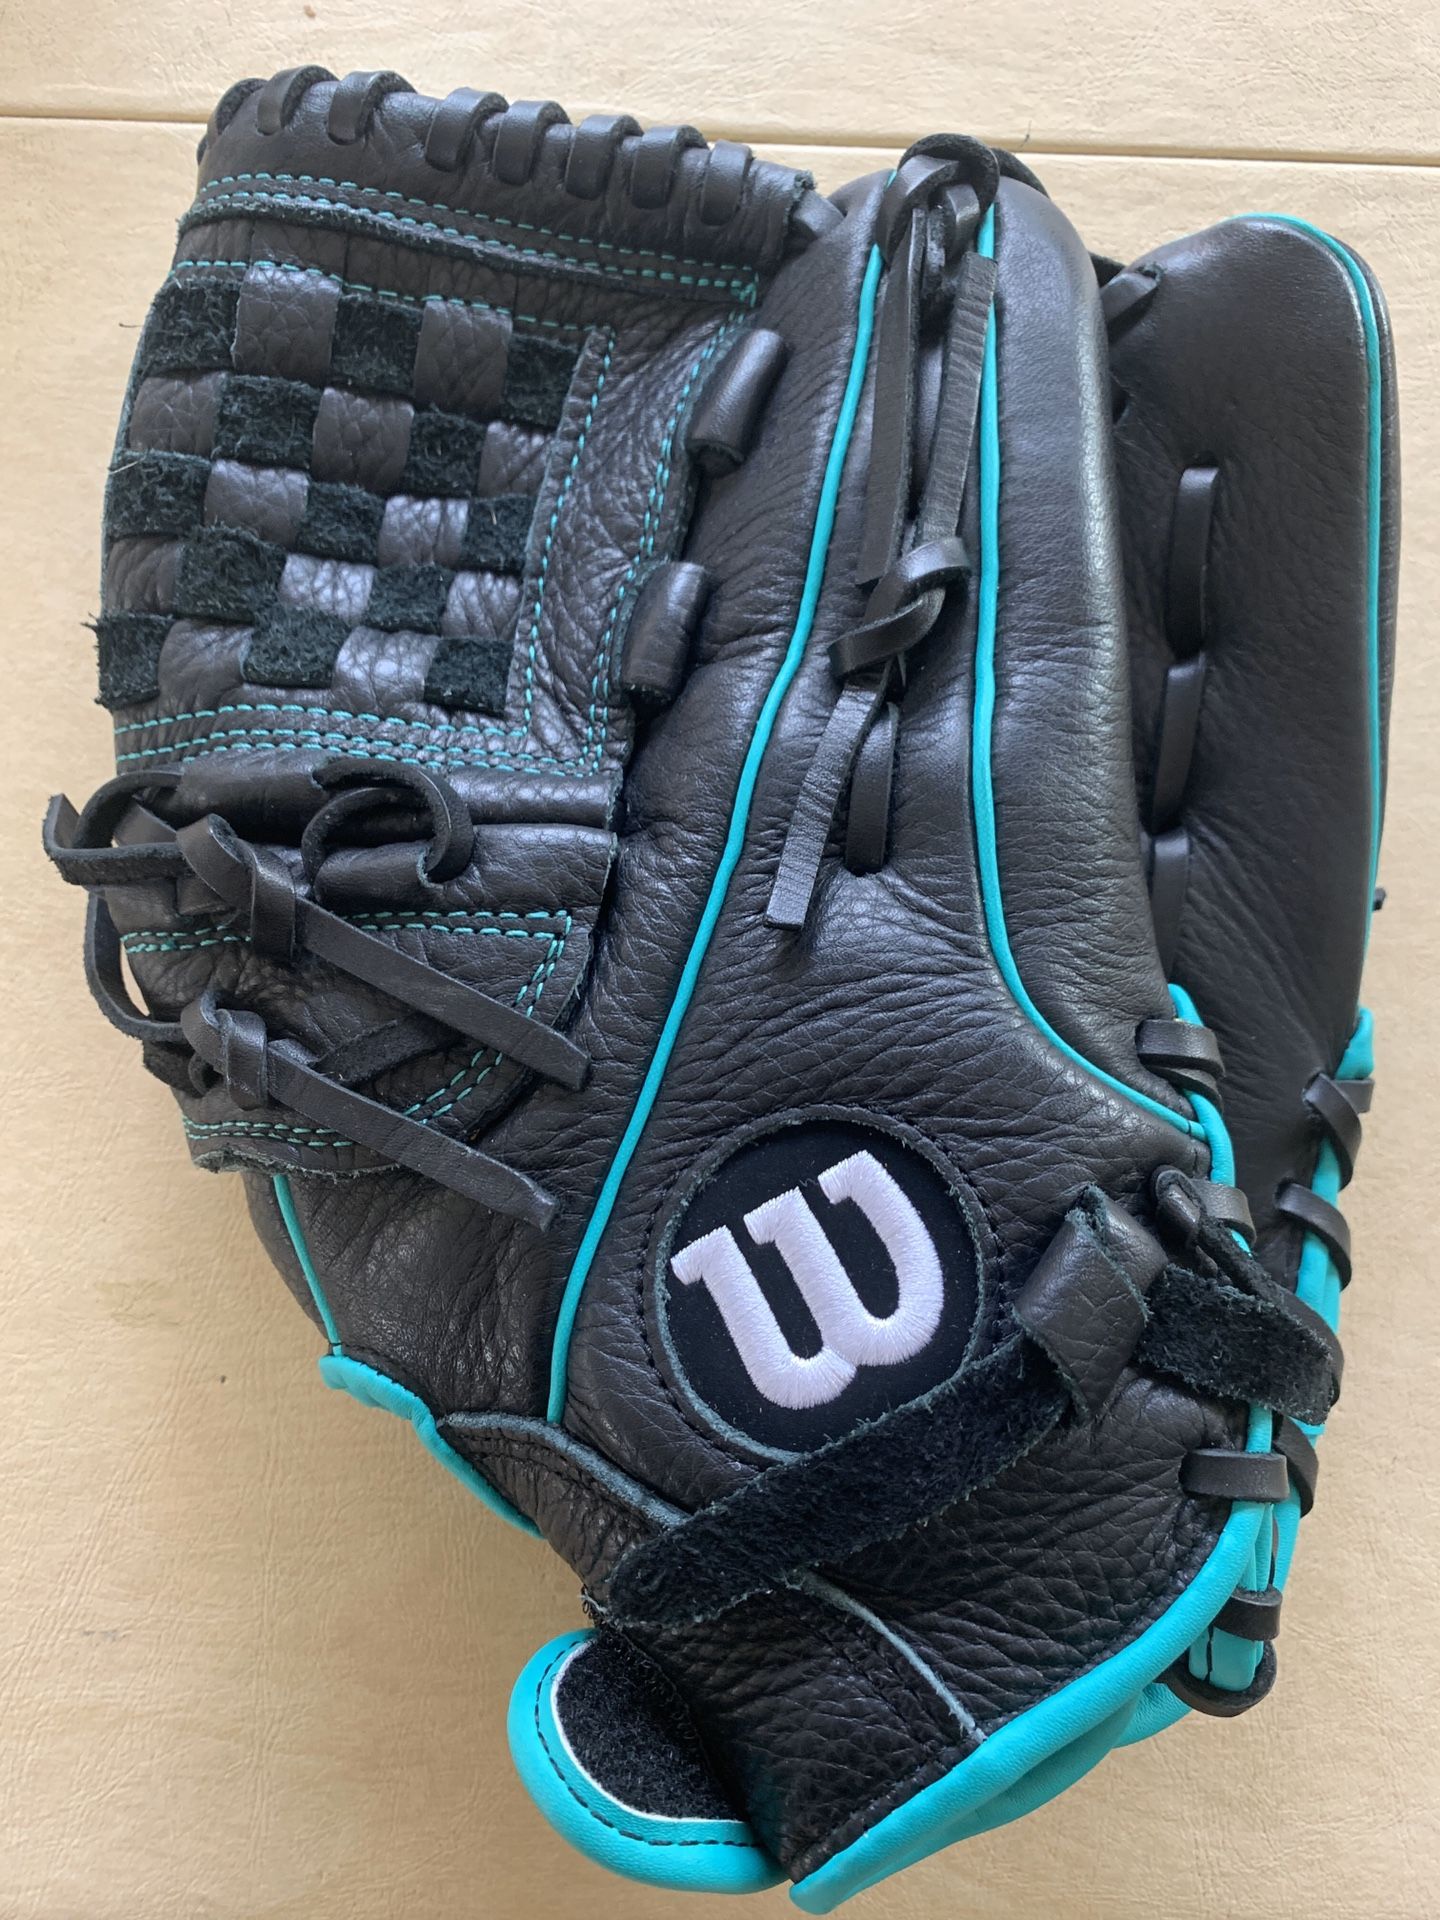 A500 12" Wilson Softball Glove